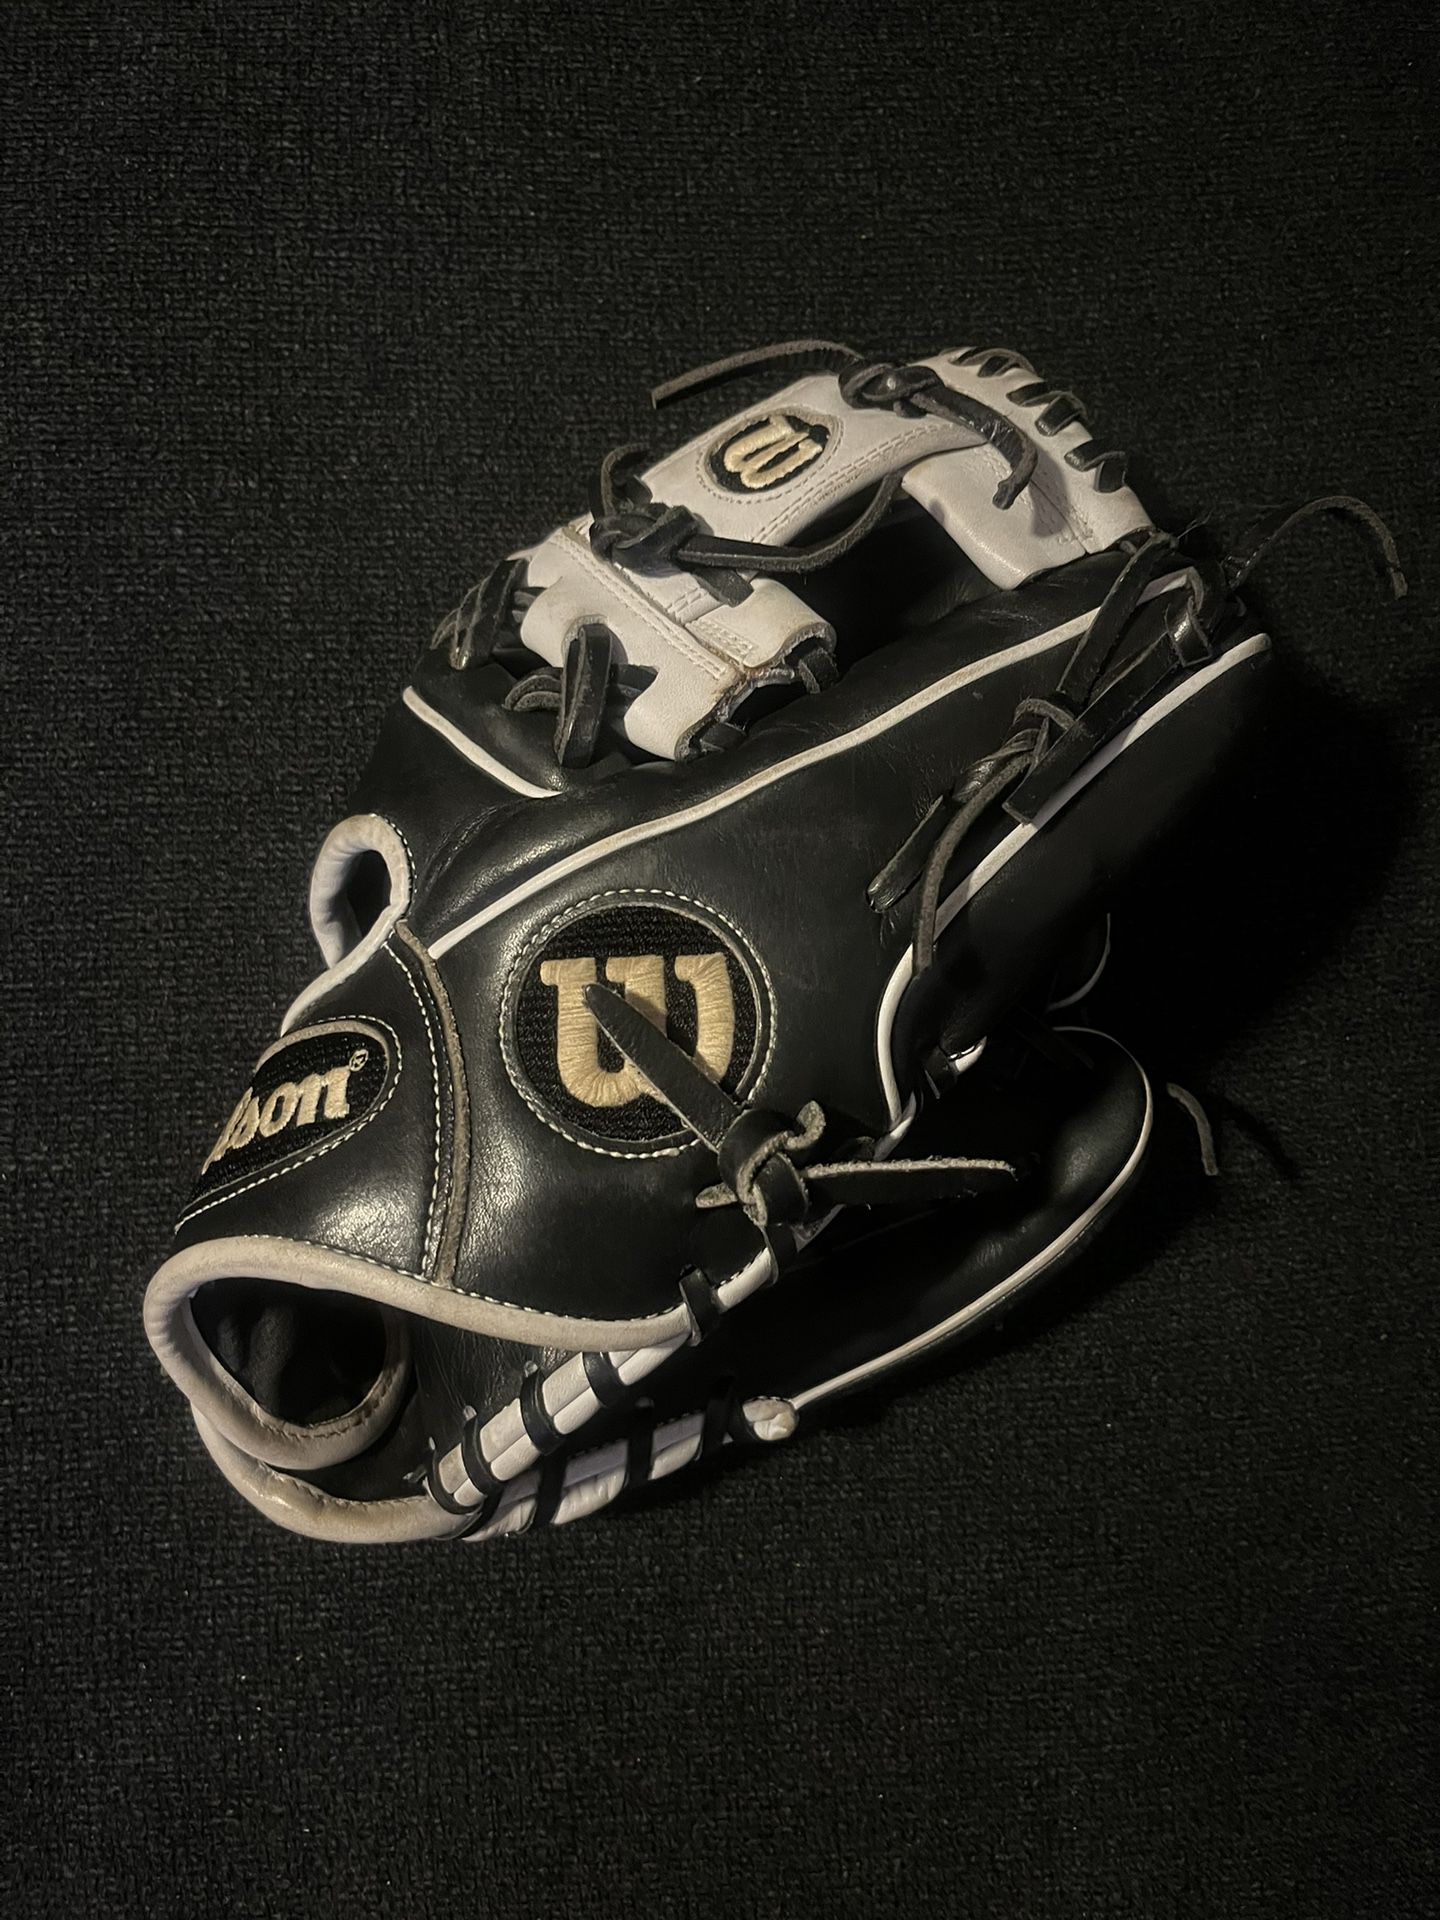 Black A2000 Baseball Glove 